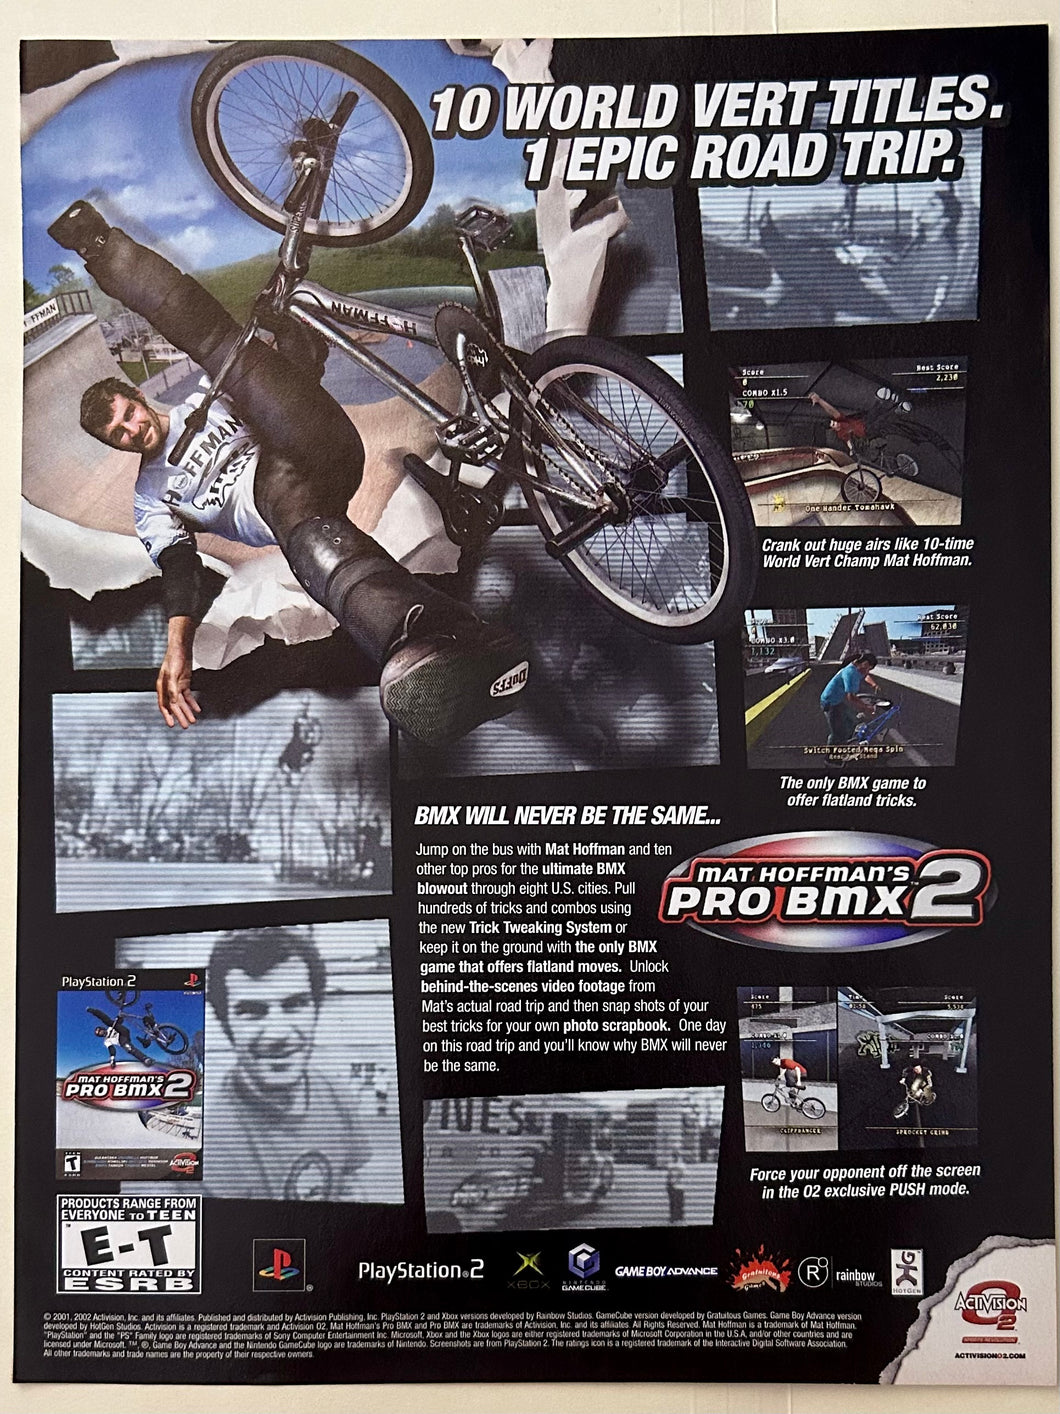 Mat Hoffman’s Pro BMX 2 - PS2 Xbox NGC GBA - Original Vintage Advertisement - Print Ads - Laminated A4 Poster